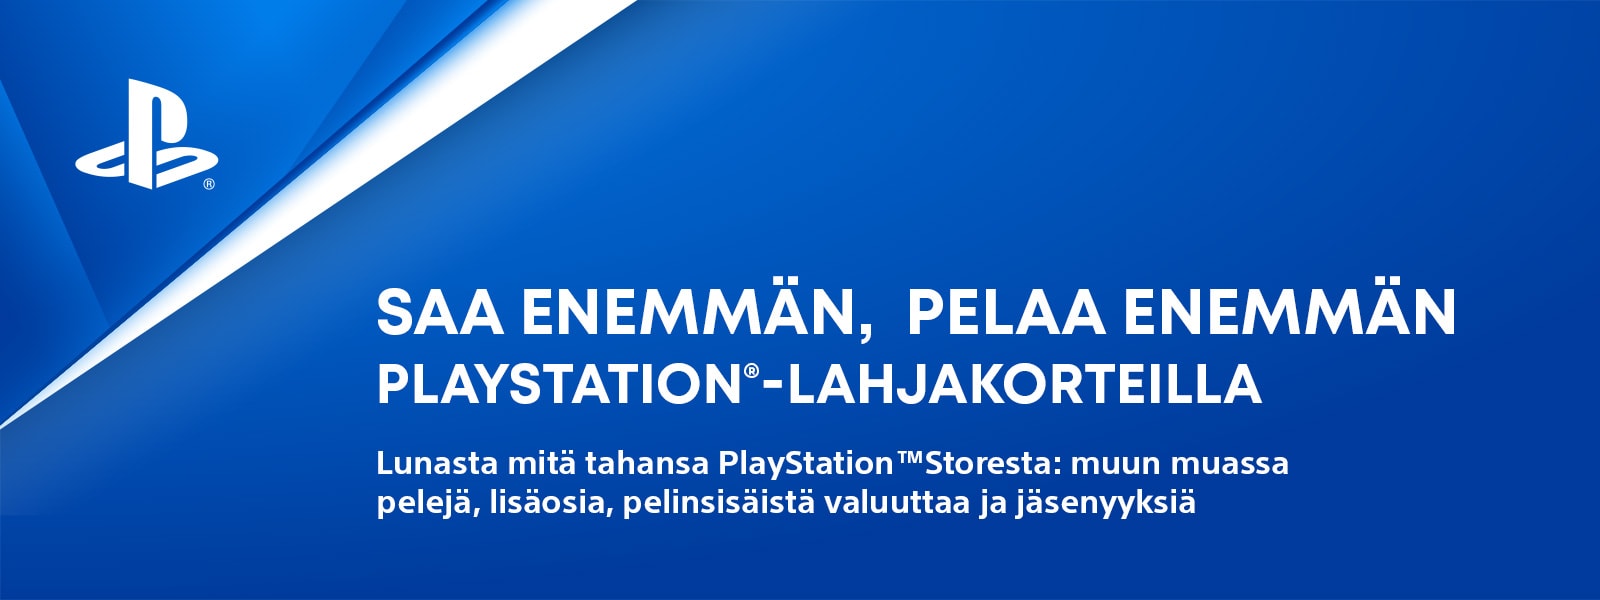 PlayStation Plus | PS Plus - Gigantti verkkokauppa